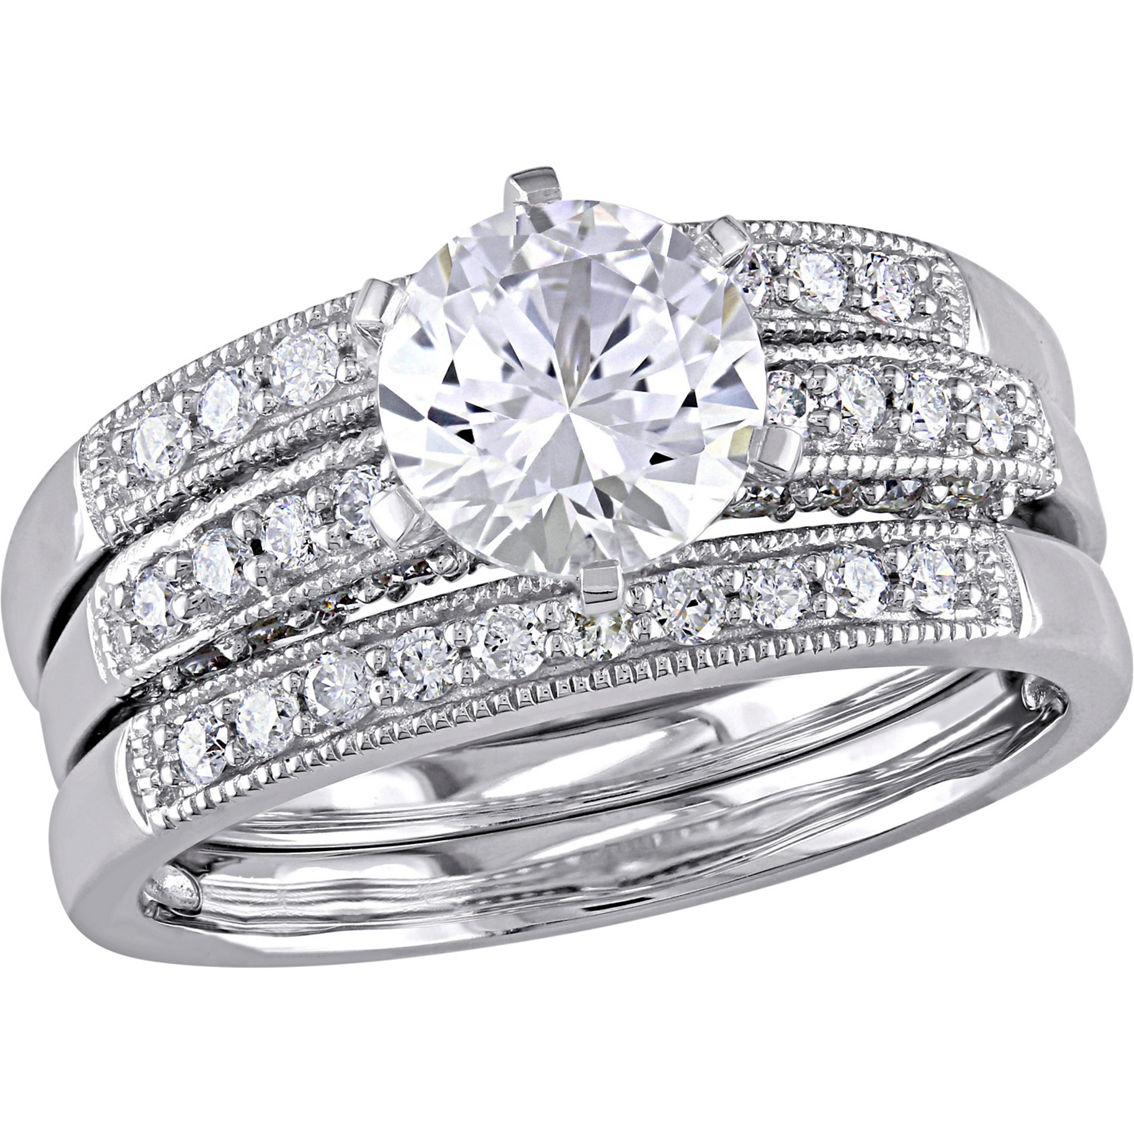 Sofia B. 10K White Gold Created White Sapphire and Diamond 3-Piece Bridal Ring Set